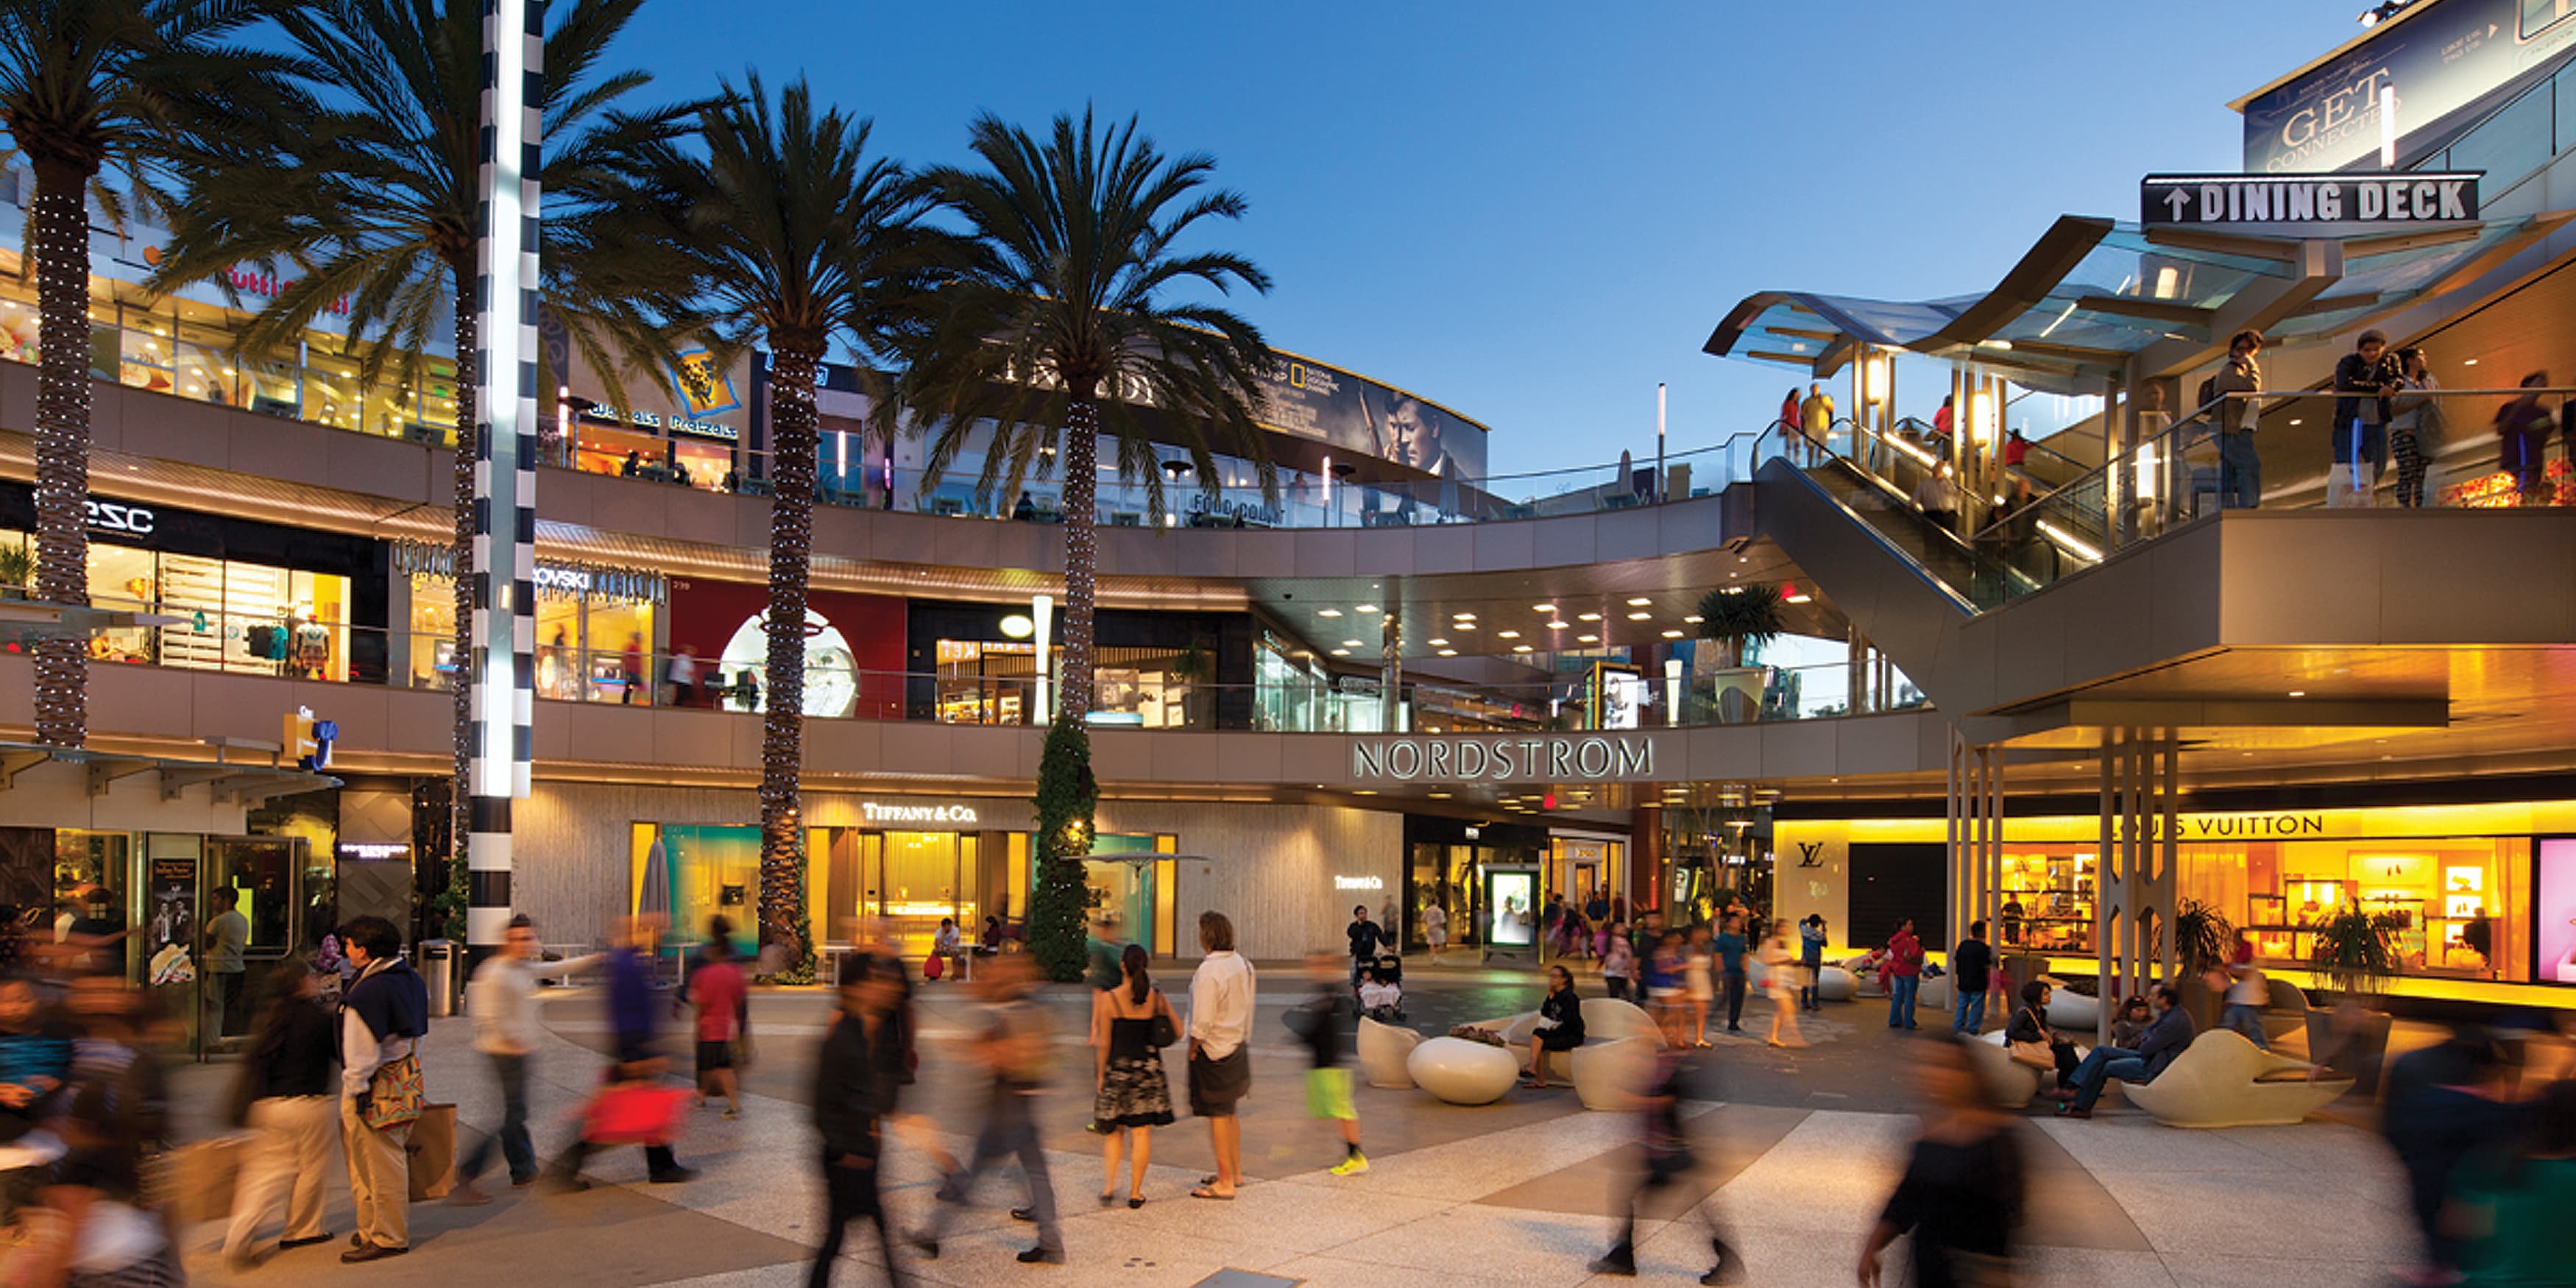 Santa Monica Place Mall directory and maps, PatricksMercy